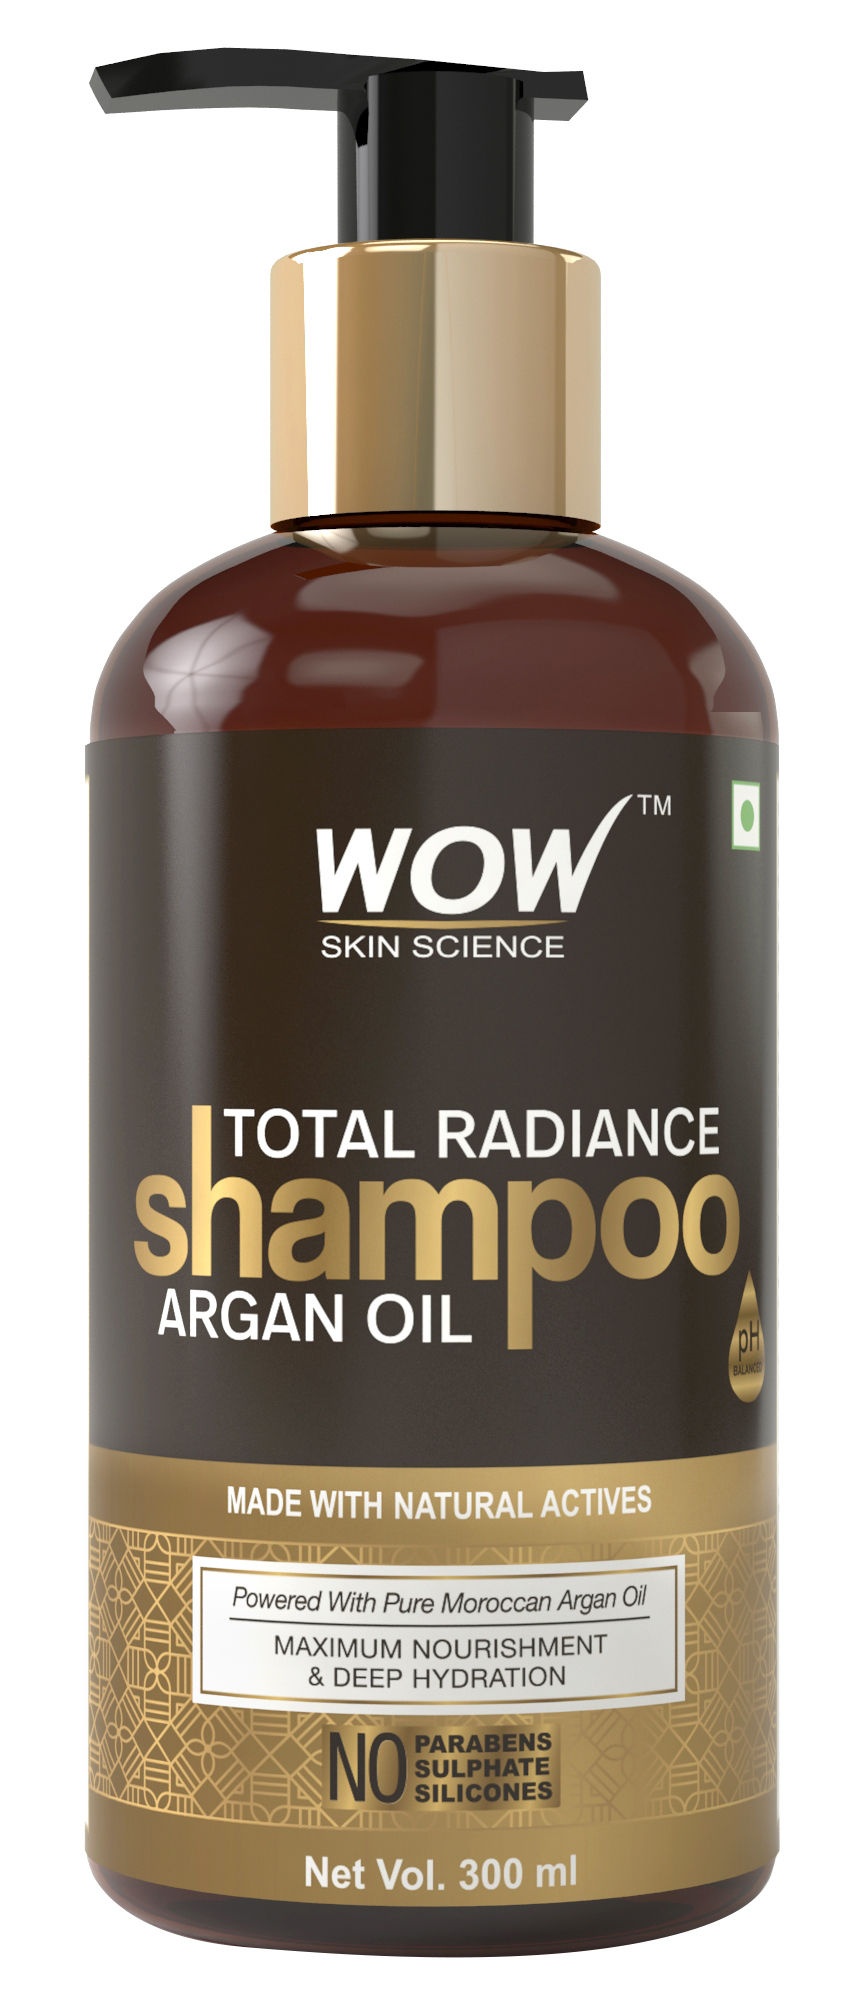 WOW skin science Total Radiance Argan Oil Shampoo